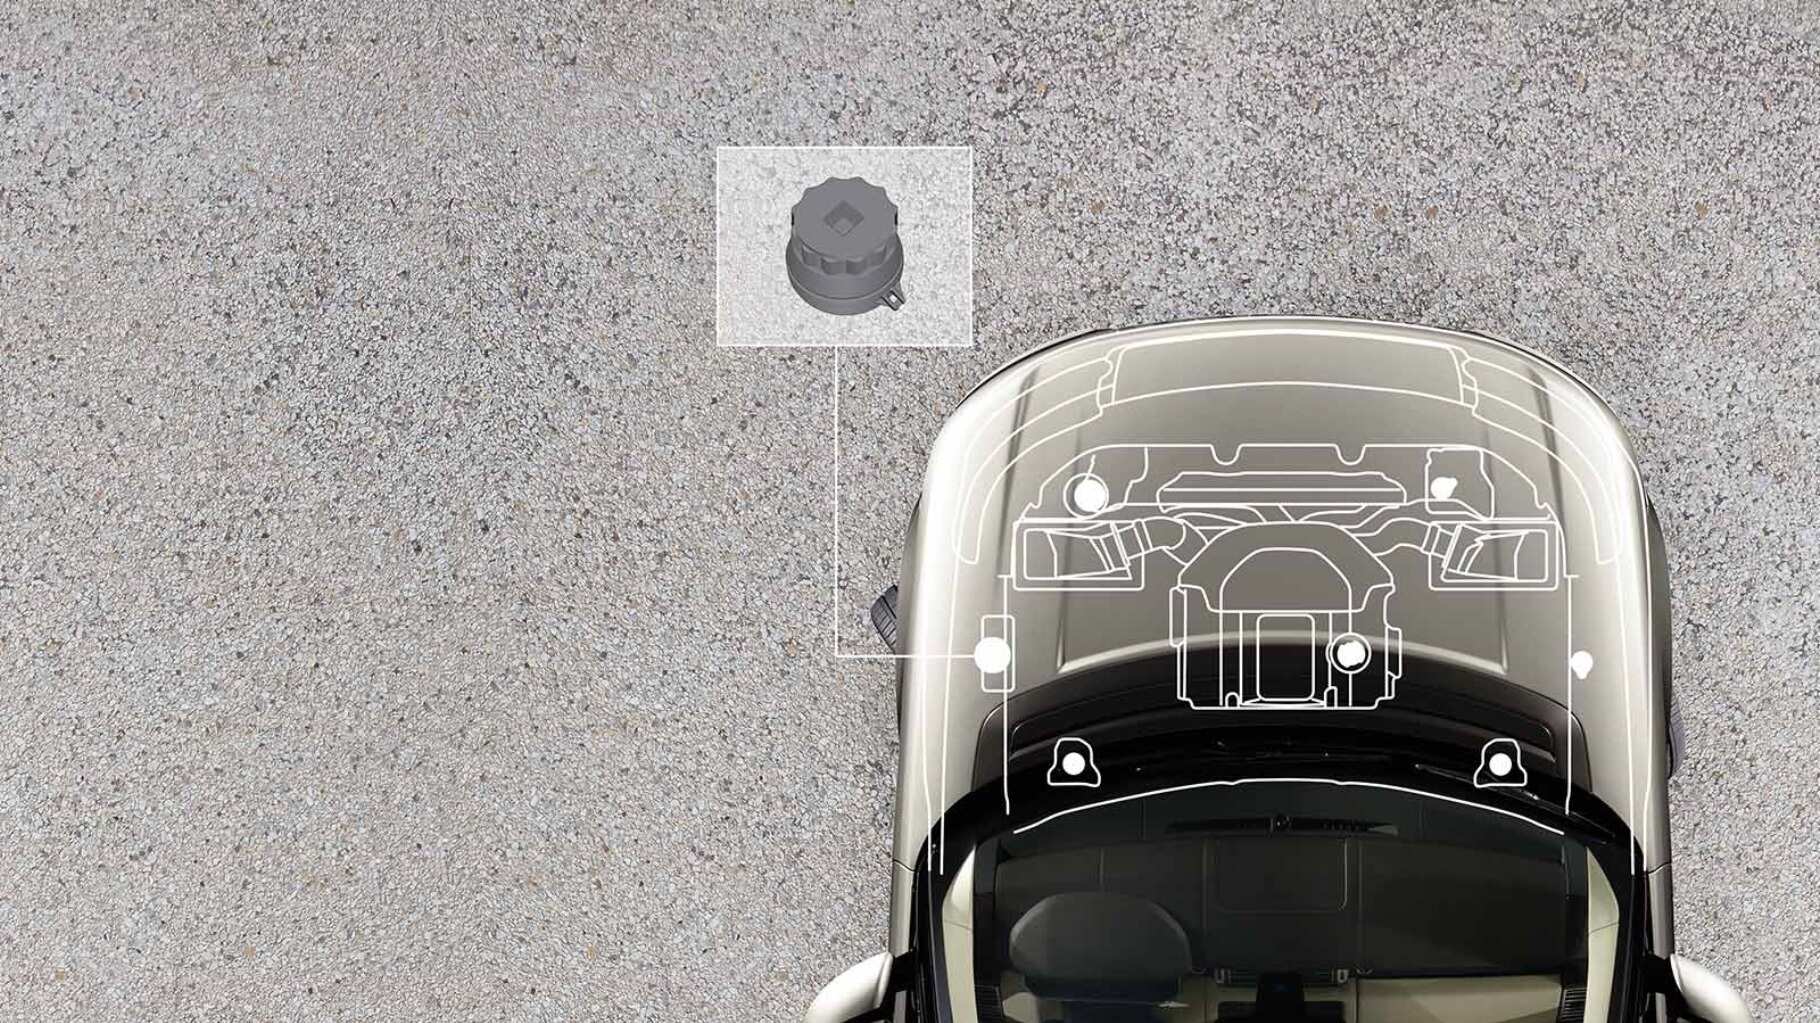 Diesel Exhaust Fluid reservoir filler cap location in a Range Rover.